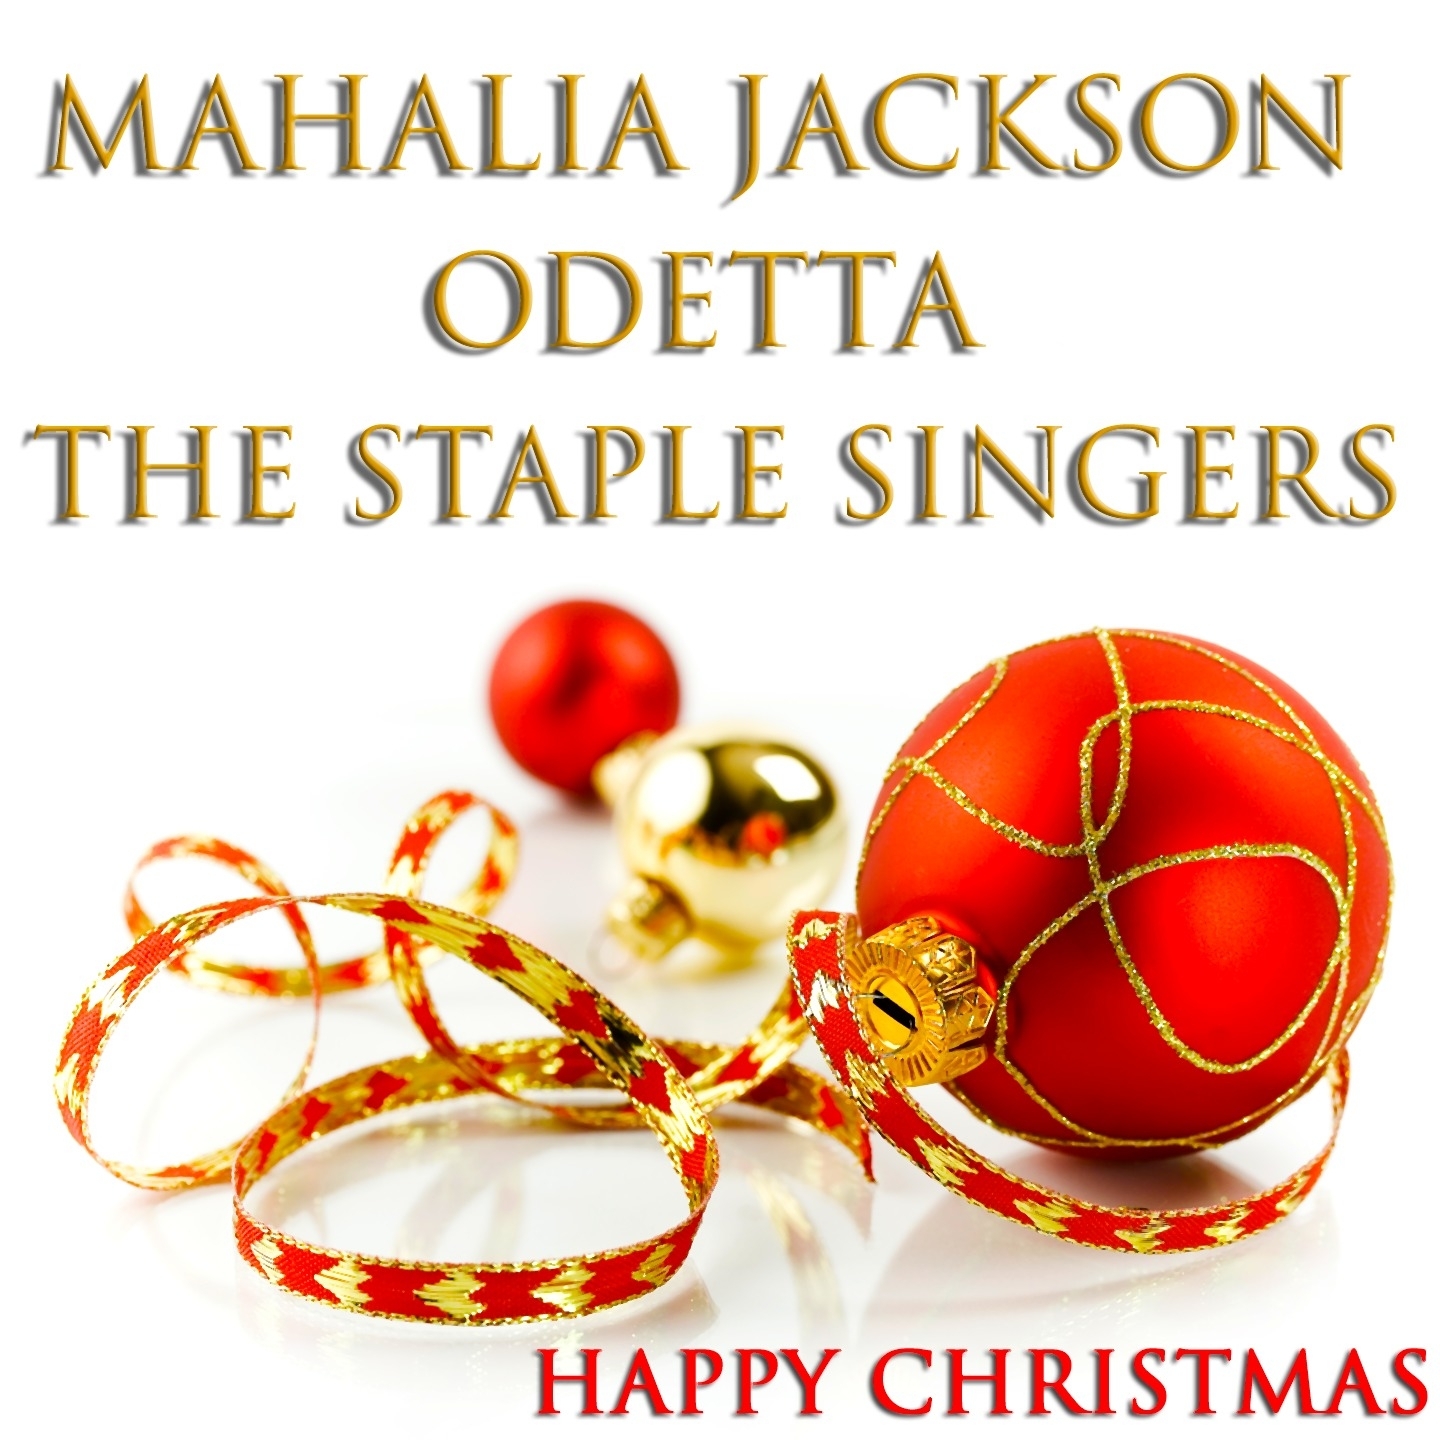 Happy Christmas (46 Original Christmas Songs - Remastered)